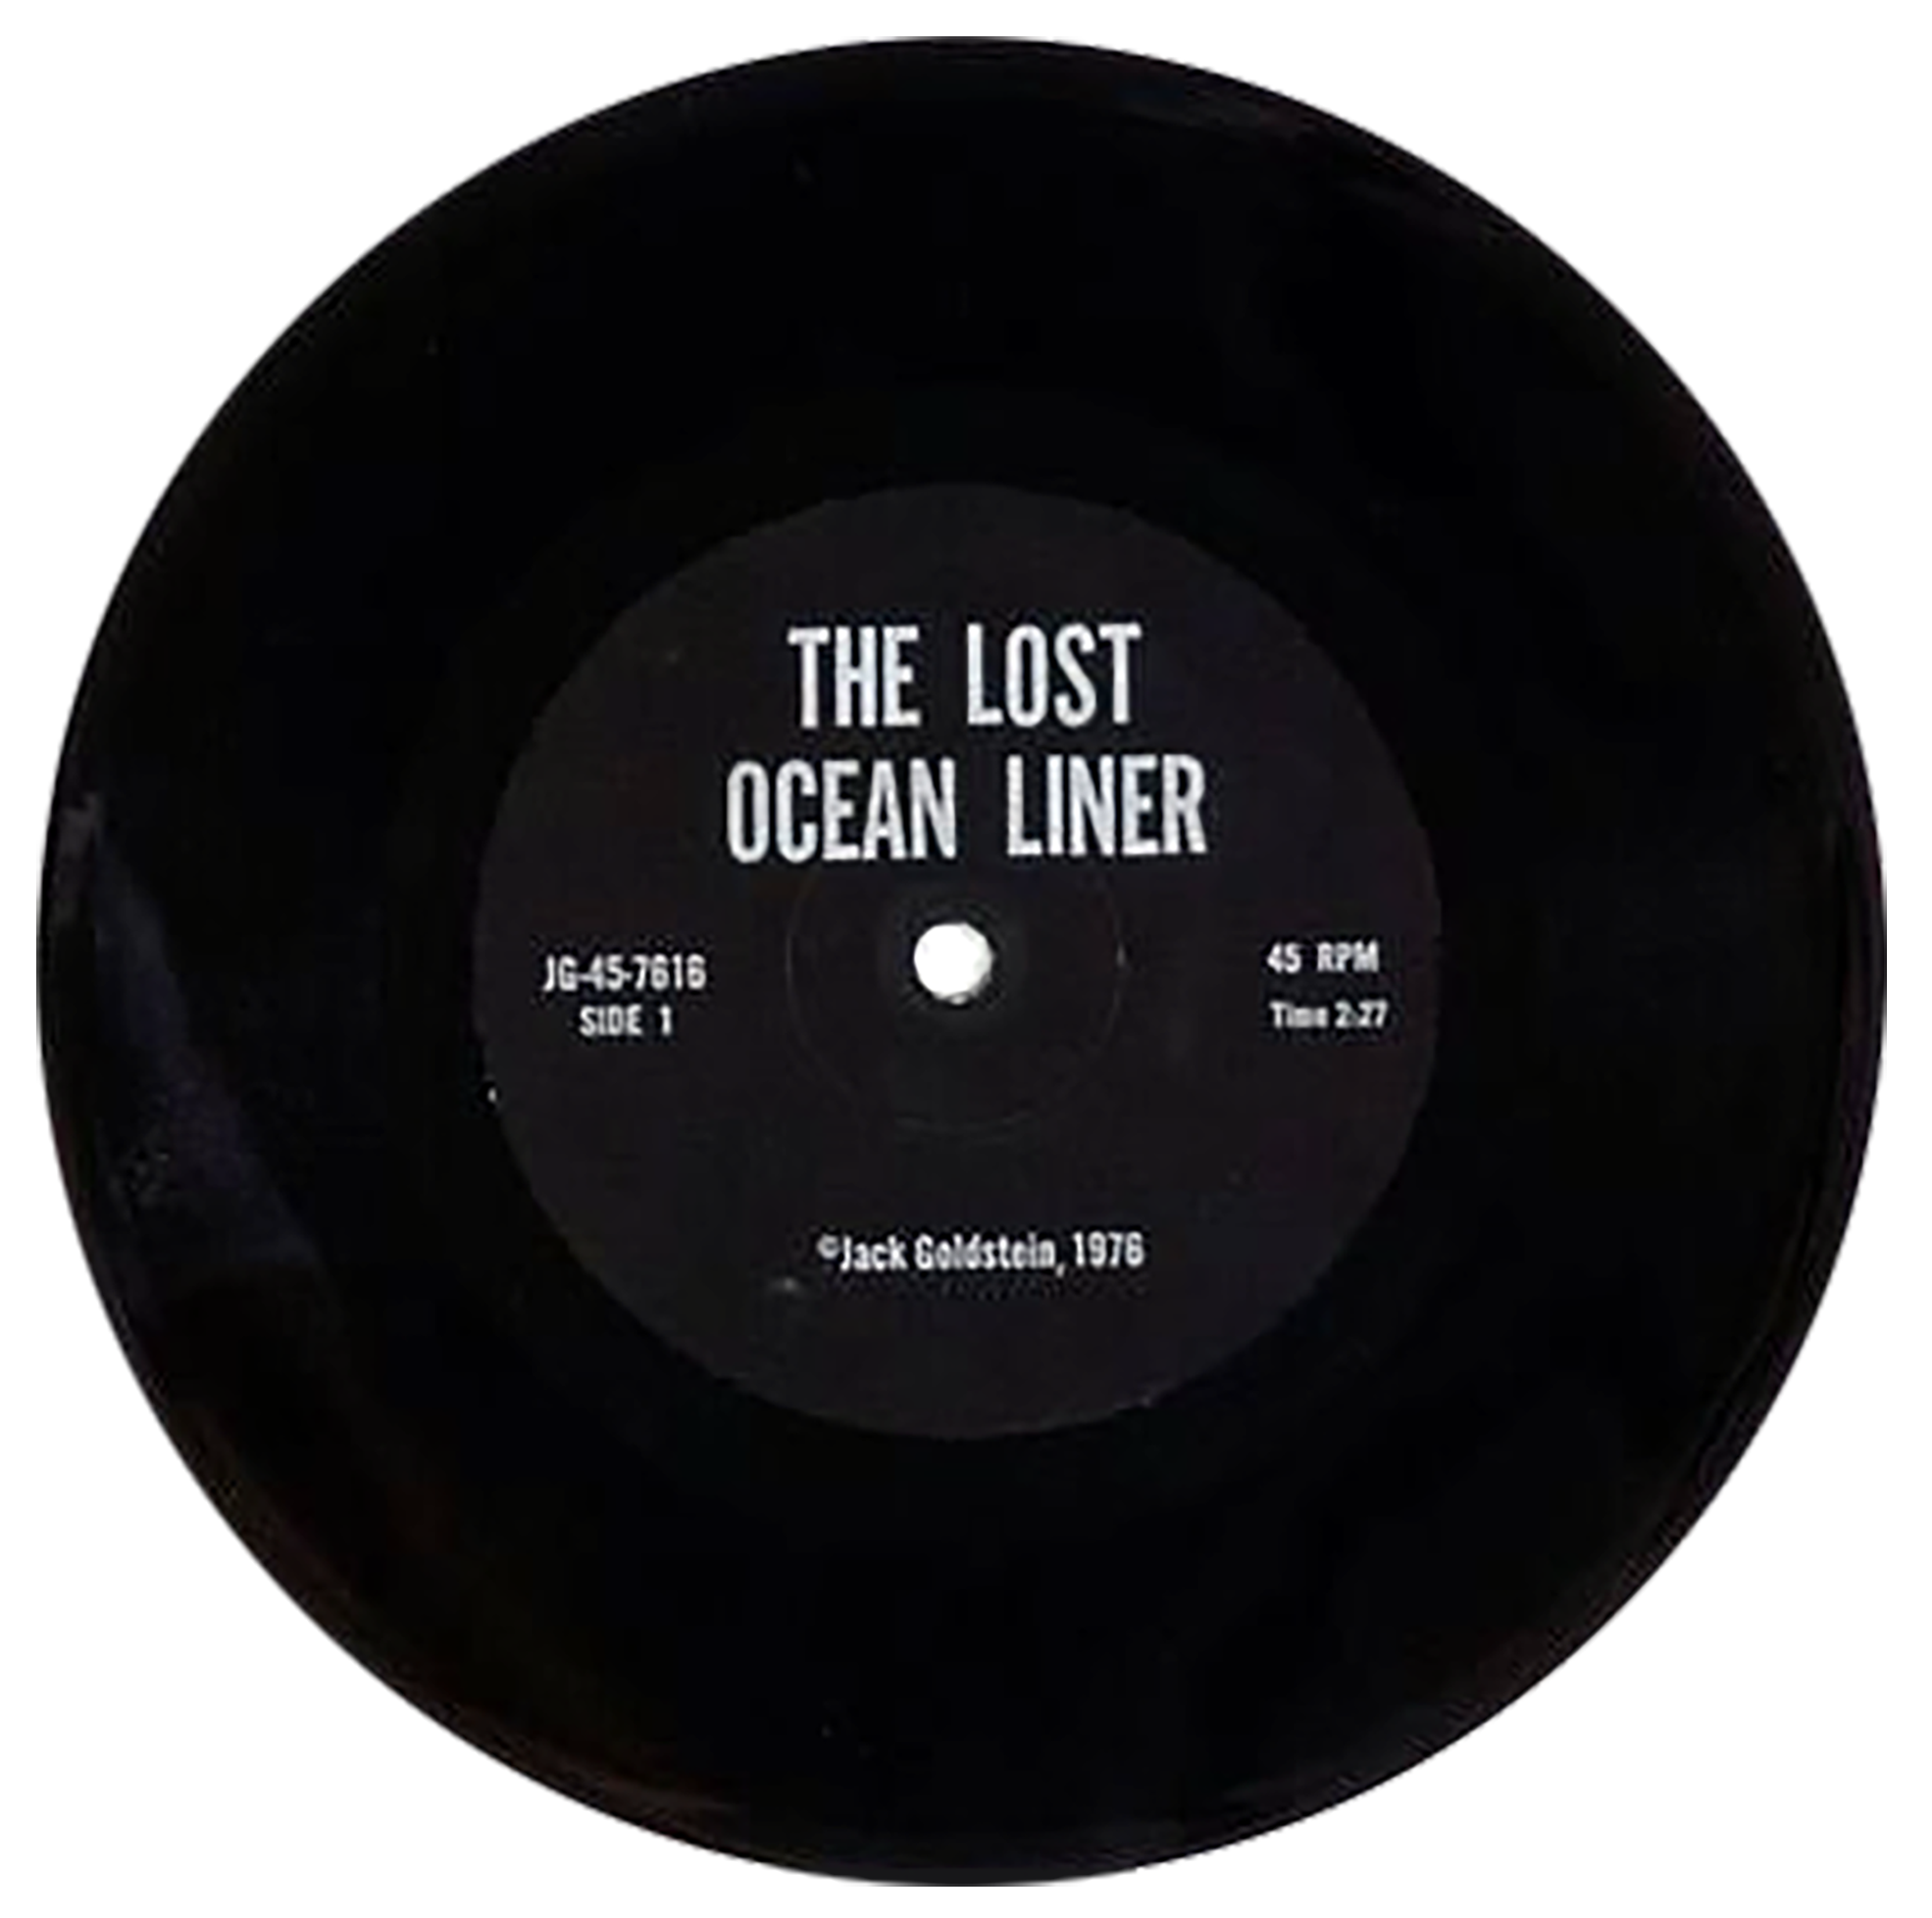  The Lost OCEAN Liner
Black vinyl - 45 rpm 7-inch record

The lost Ocean Liner is one of the nine components of :
A Suite of Nine 45 rpm 7-Inch Records with Sound Effects
1976